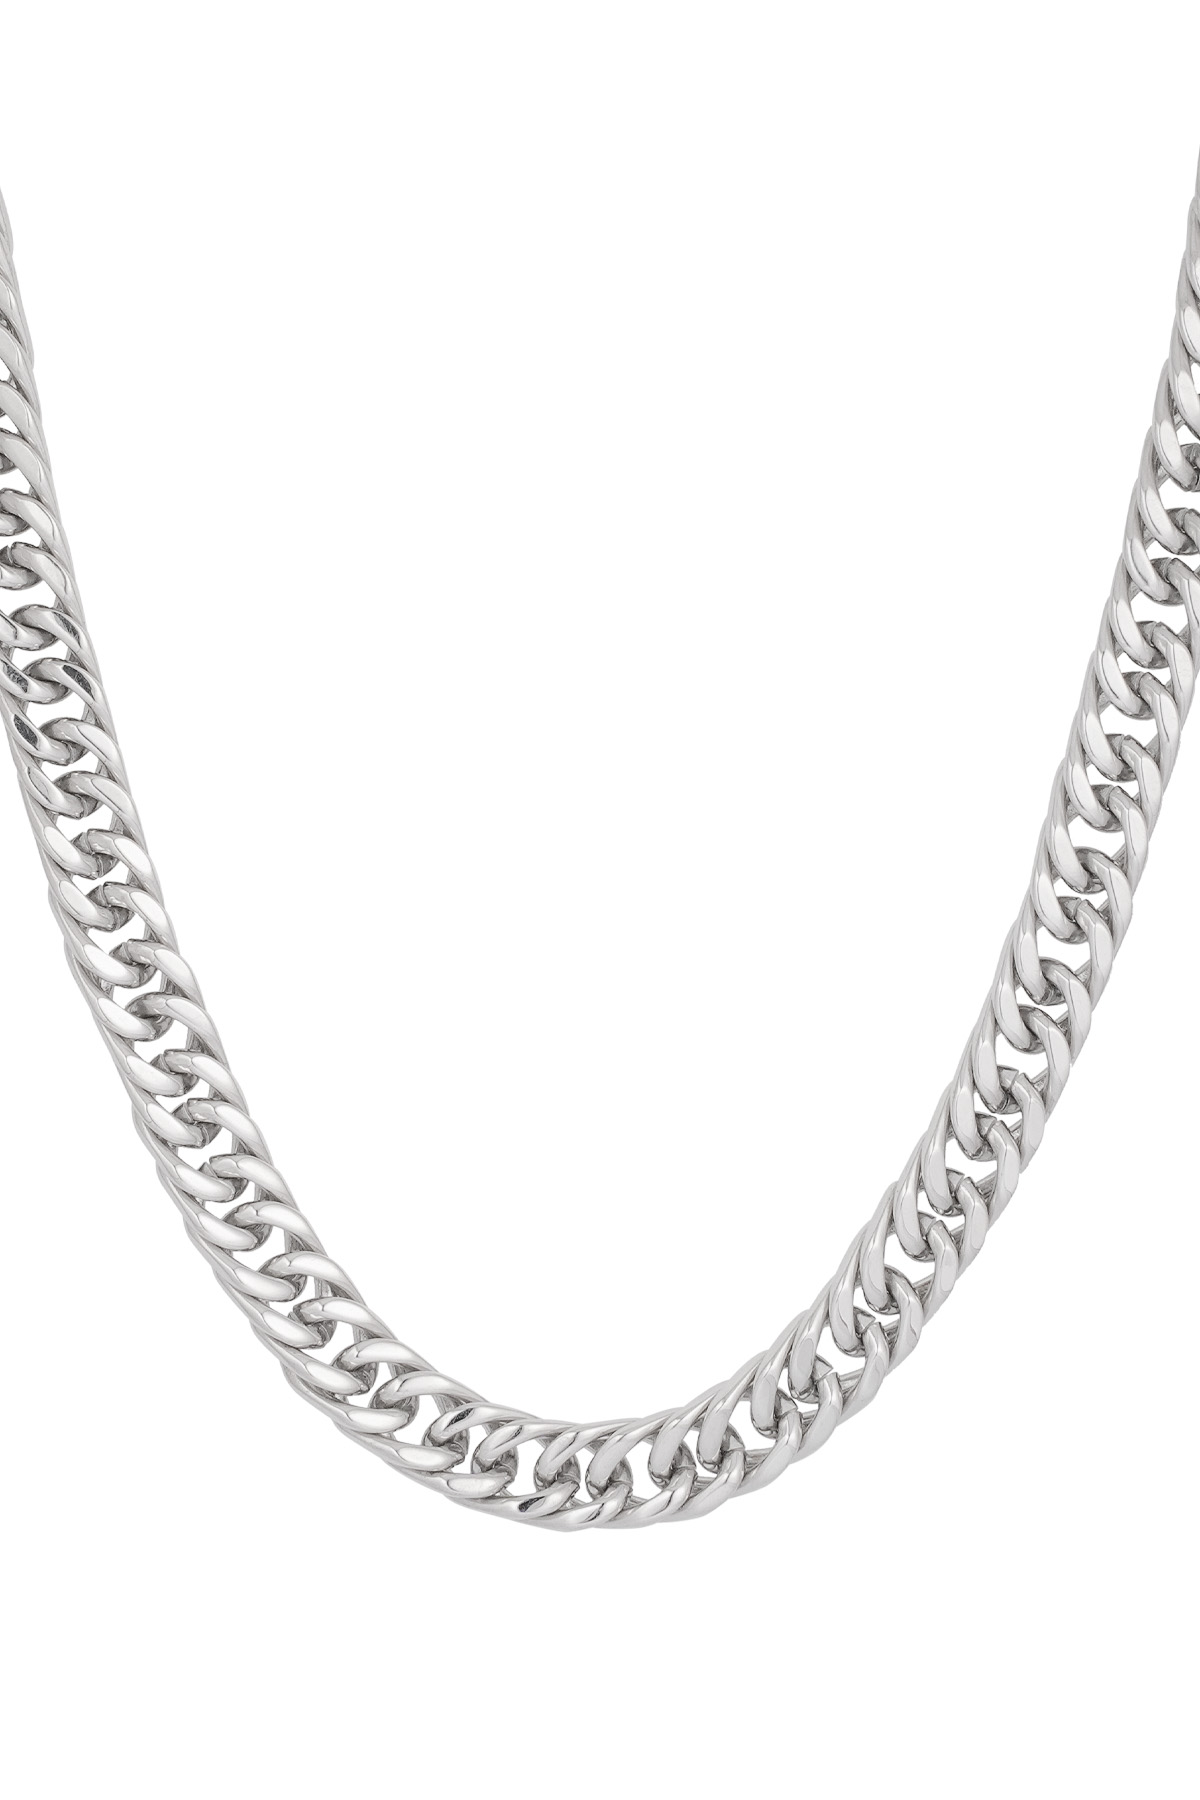 Men's chain necklace - silver